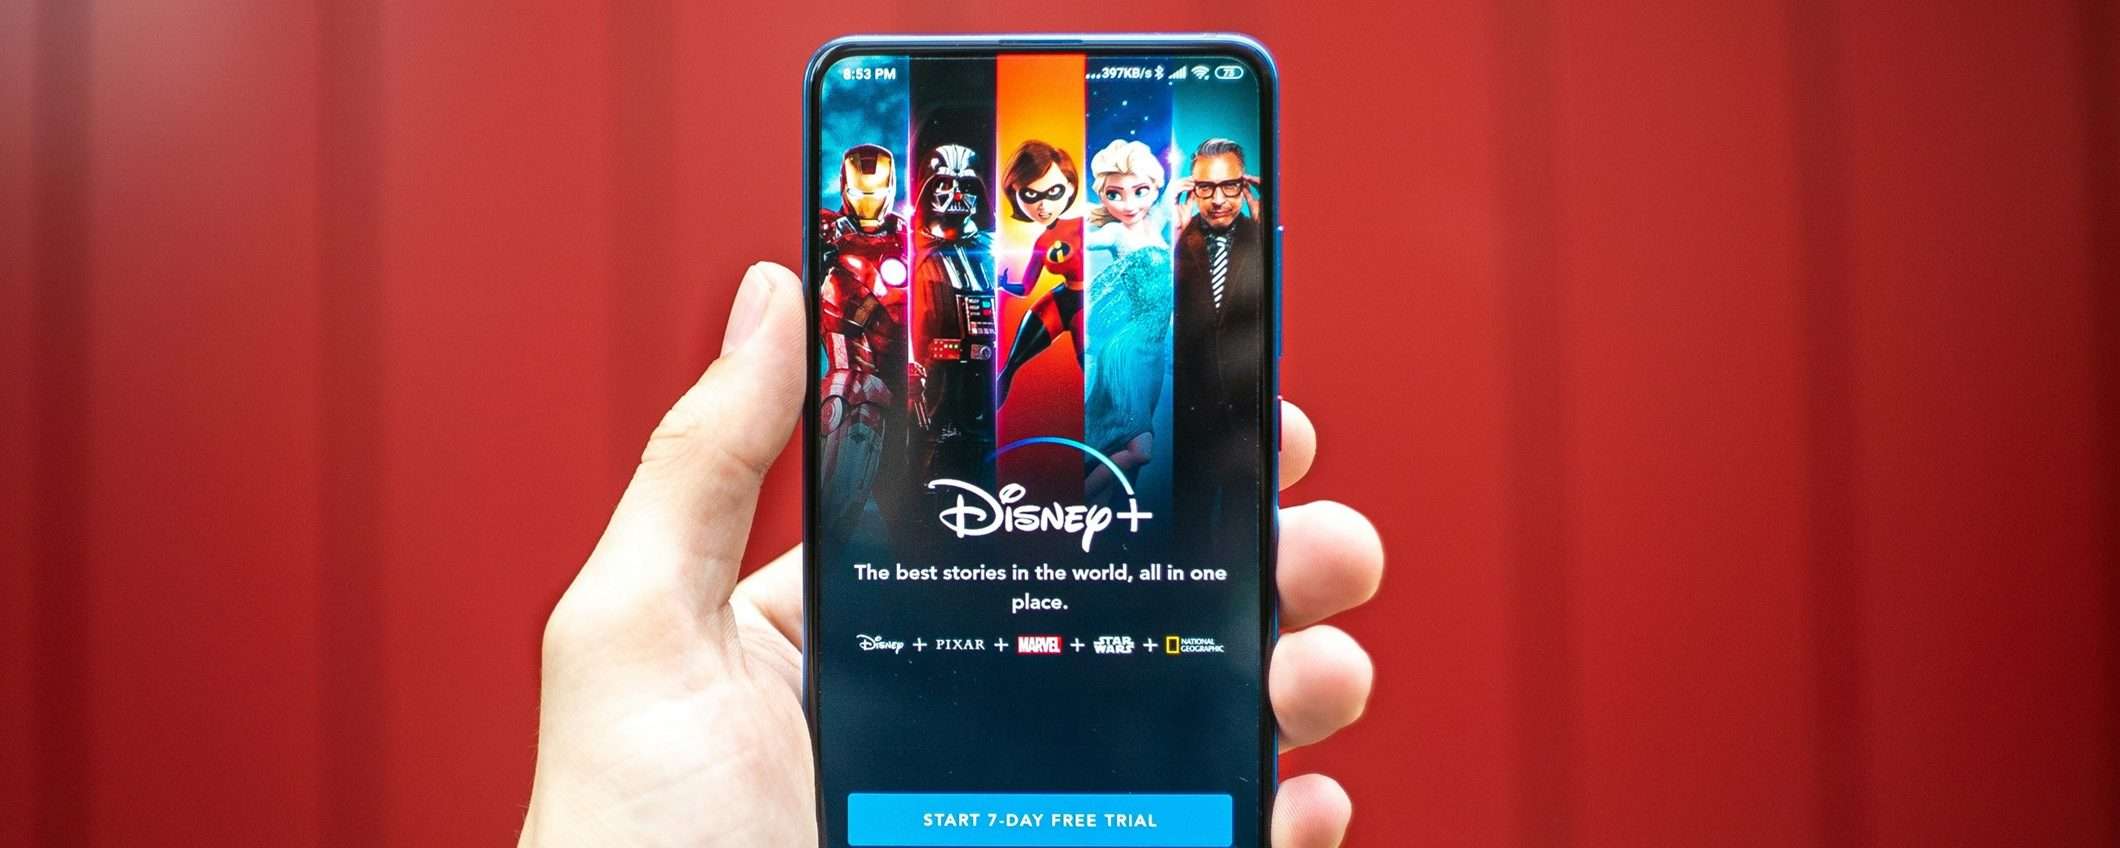 Disney Plus vieta la condivisione delle password